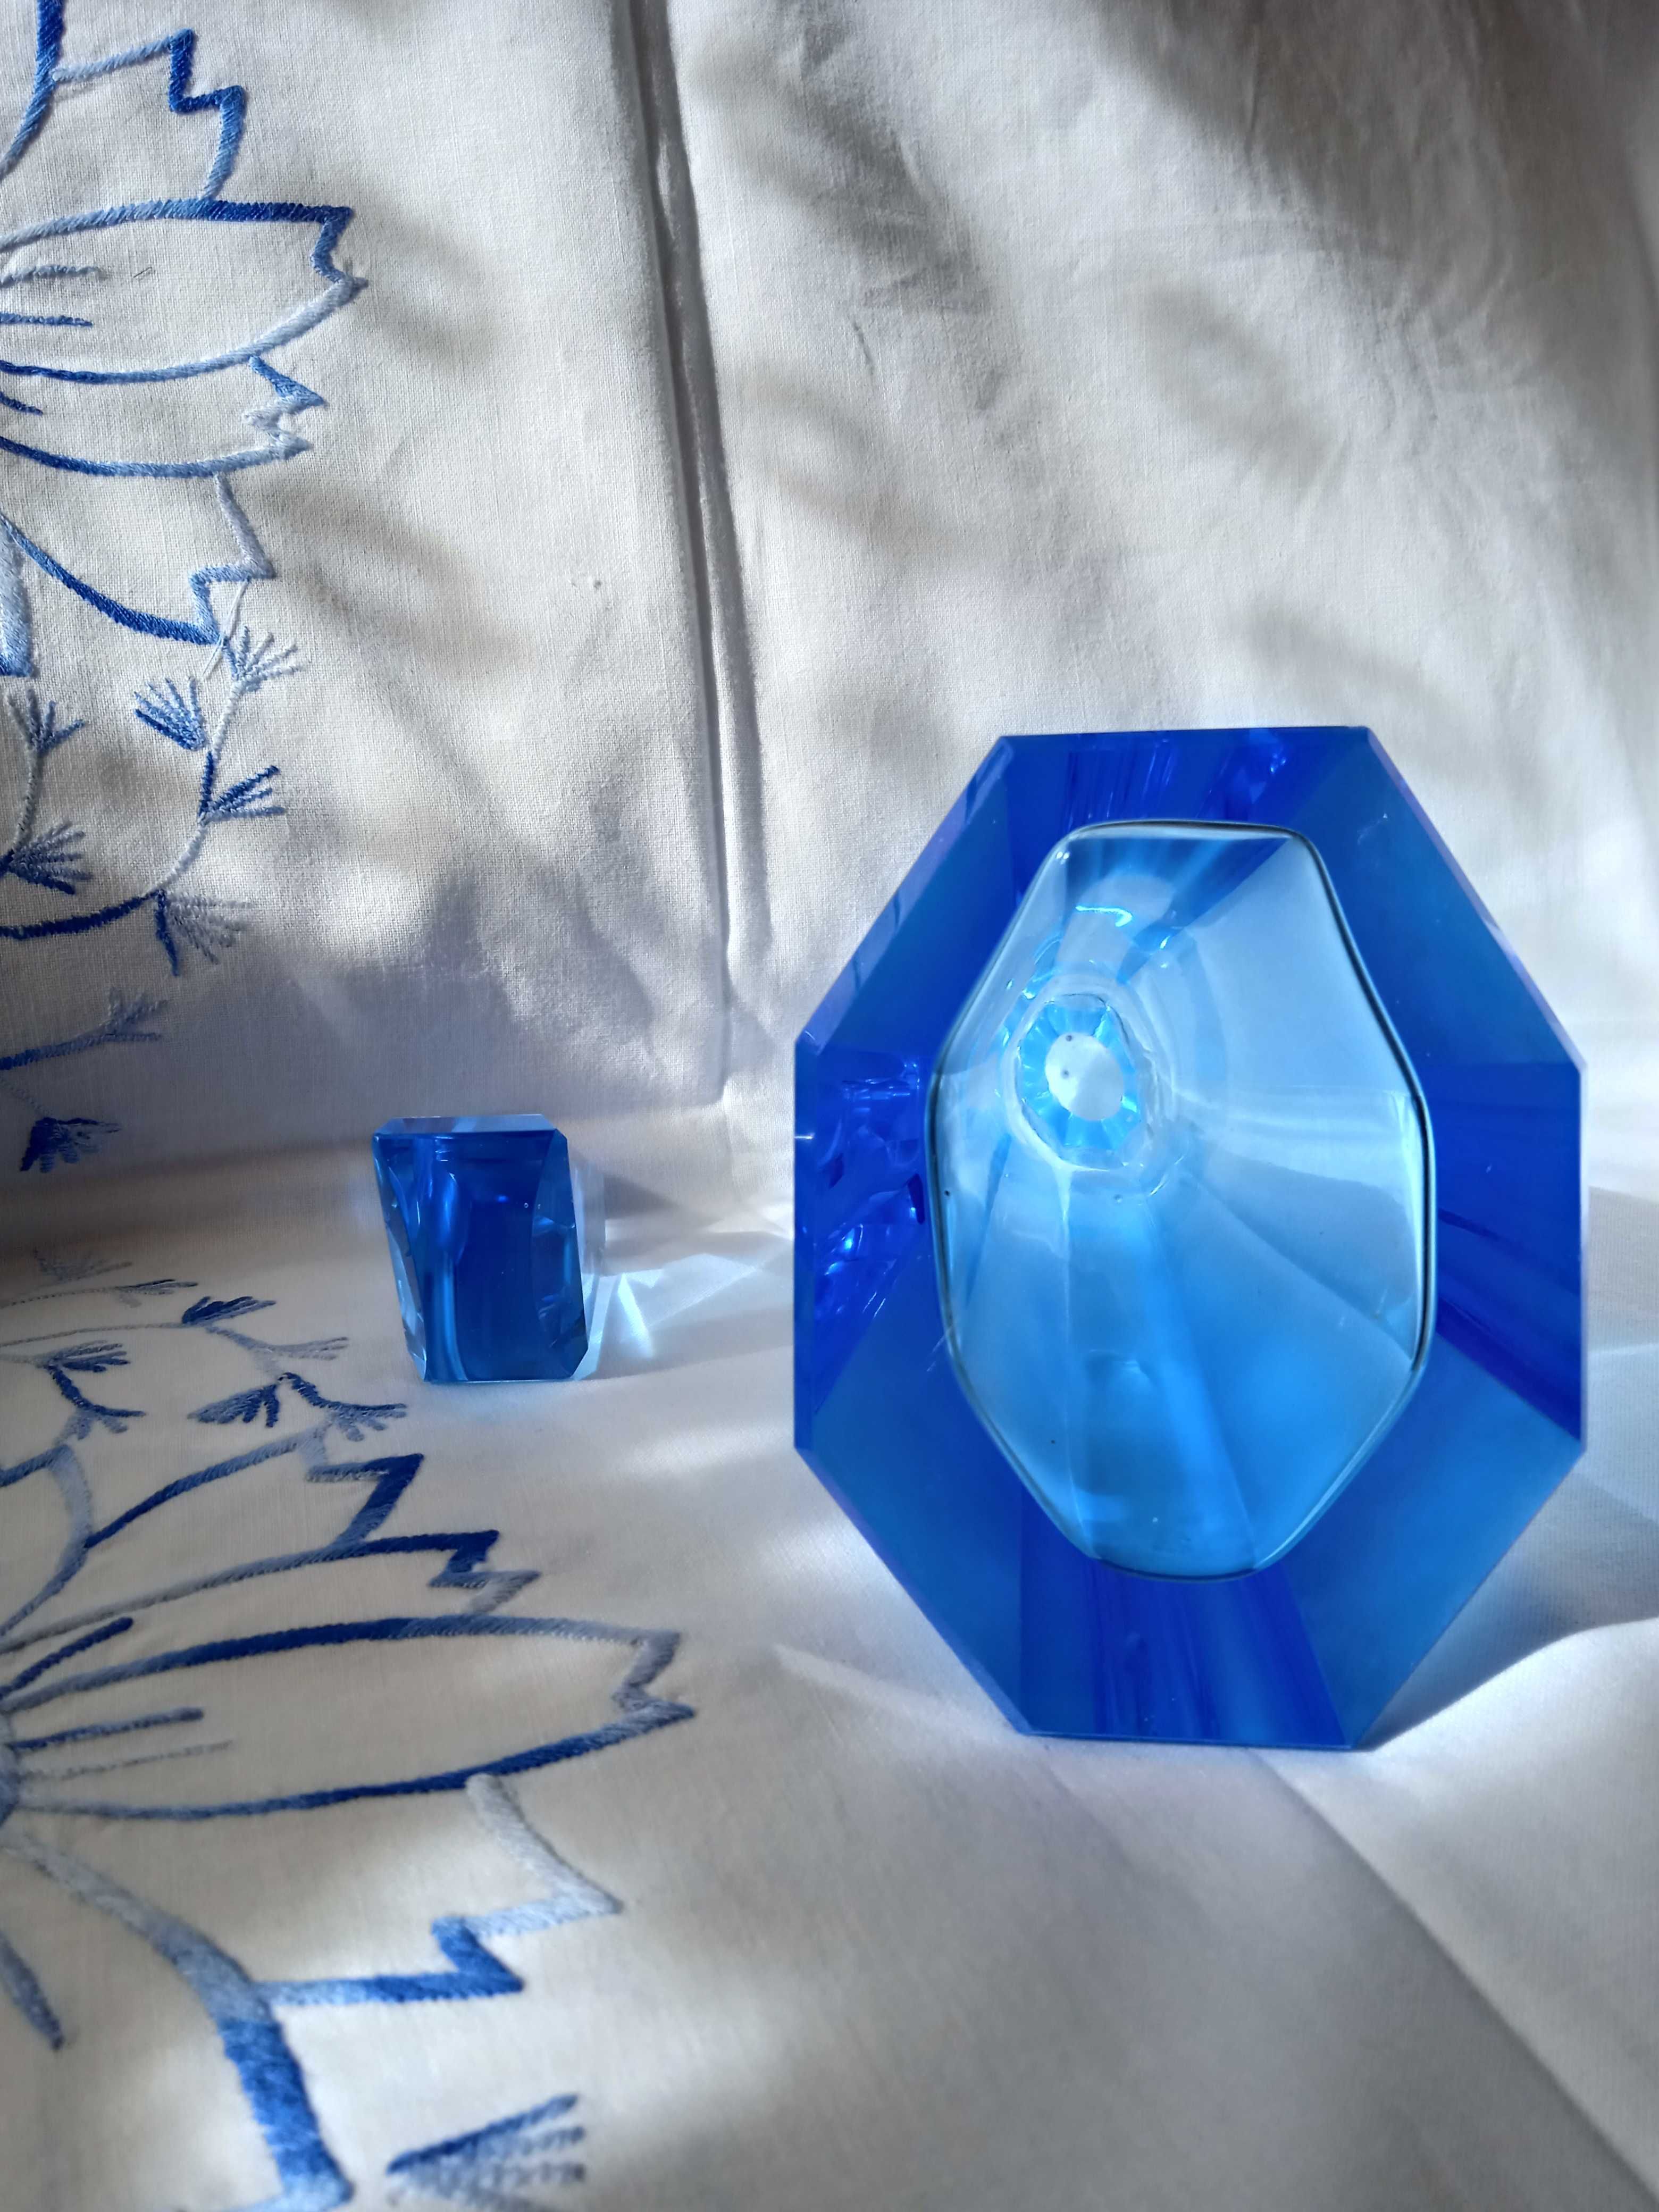 Moser karafka niebieska, kobalt, wys 23 cm, granatowa